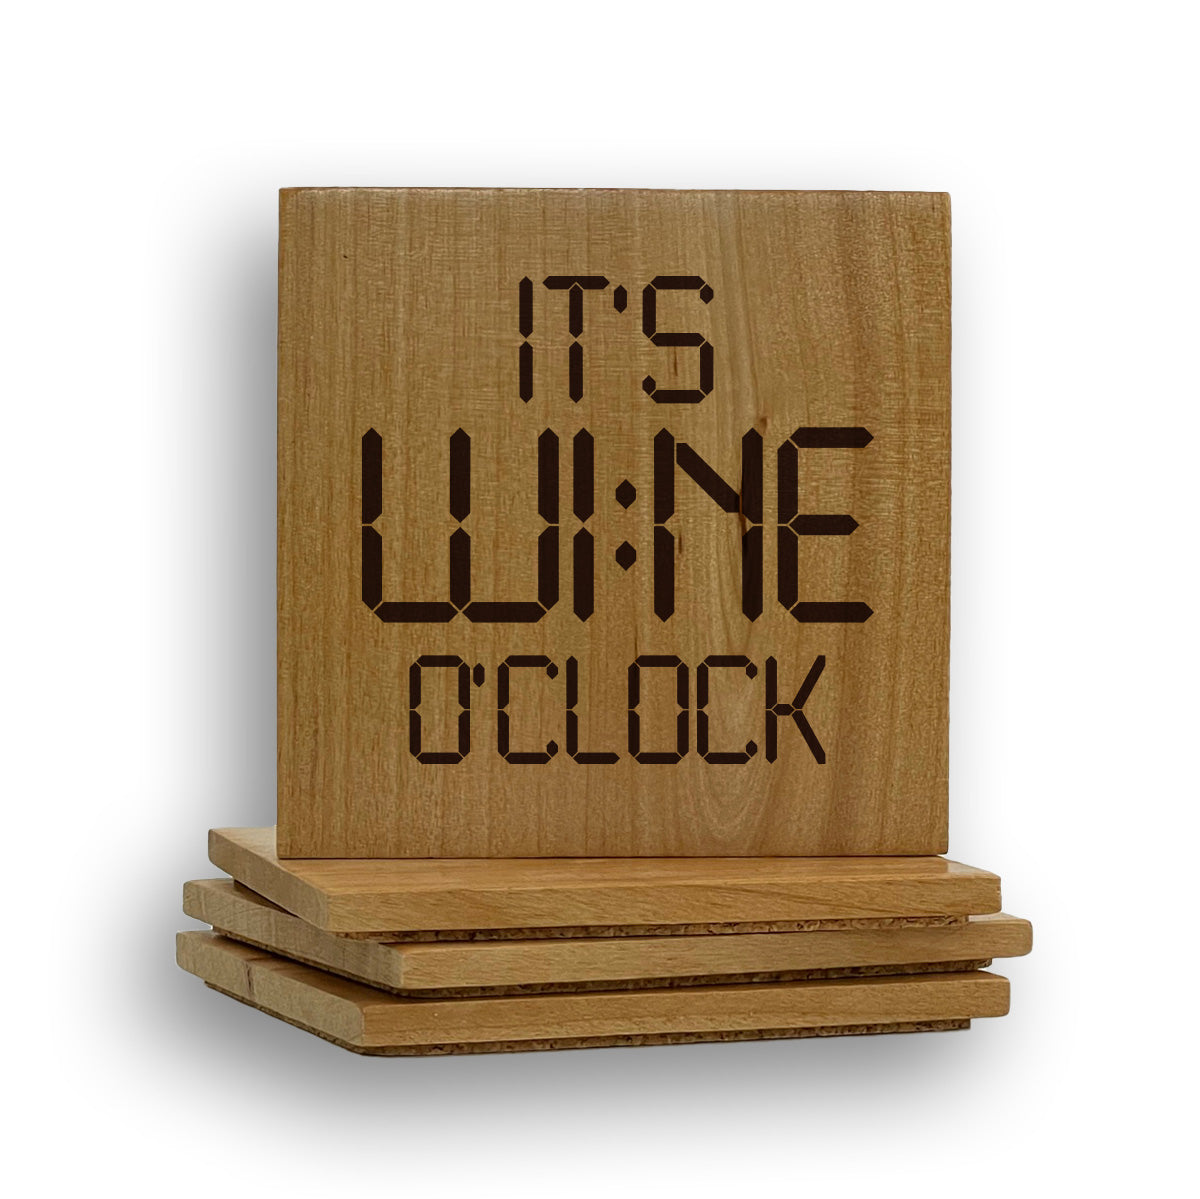 It's Wine O'clock Coaster